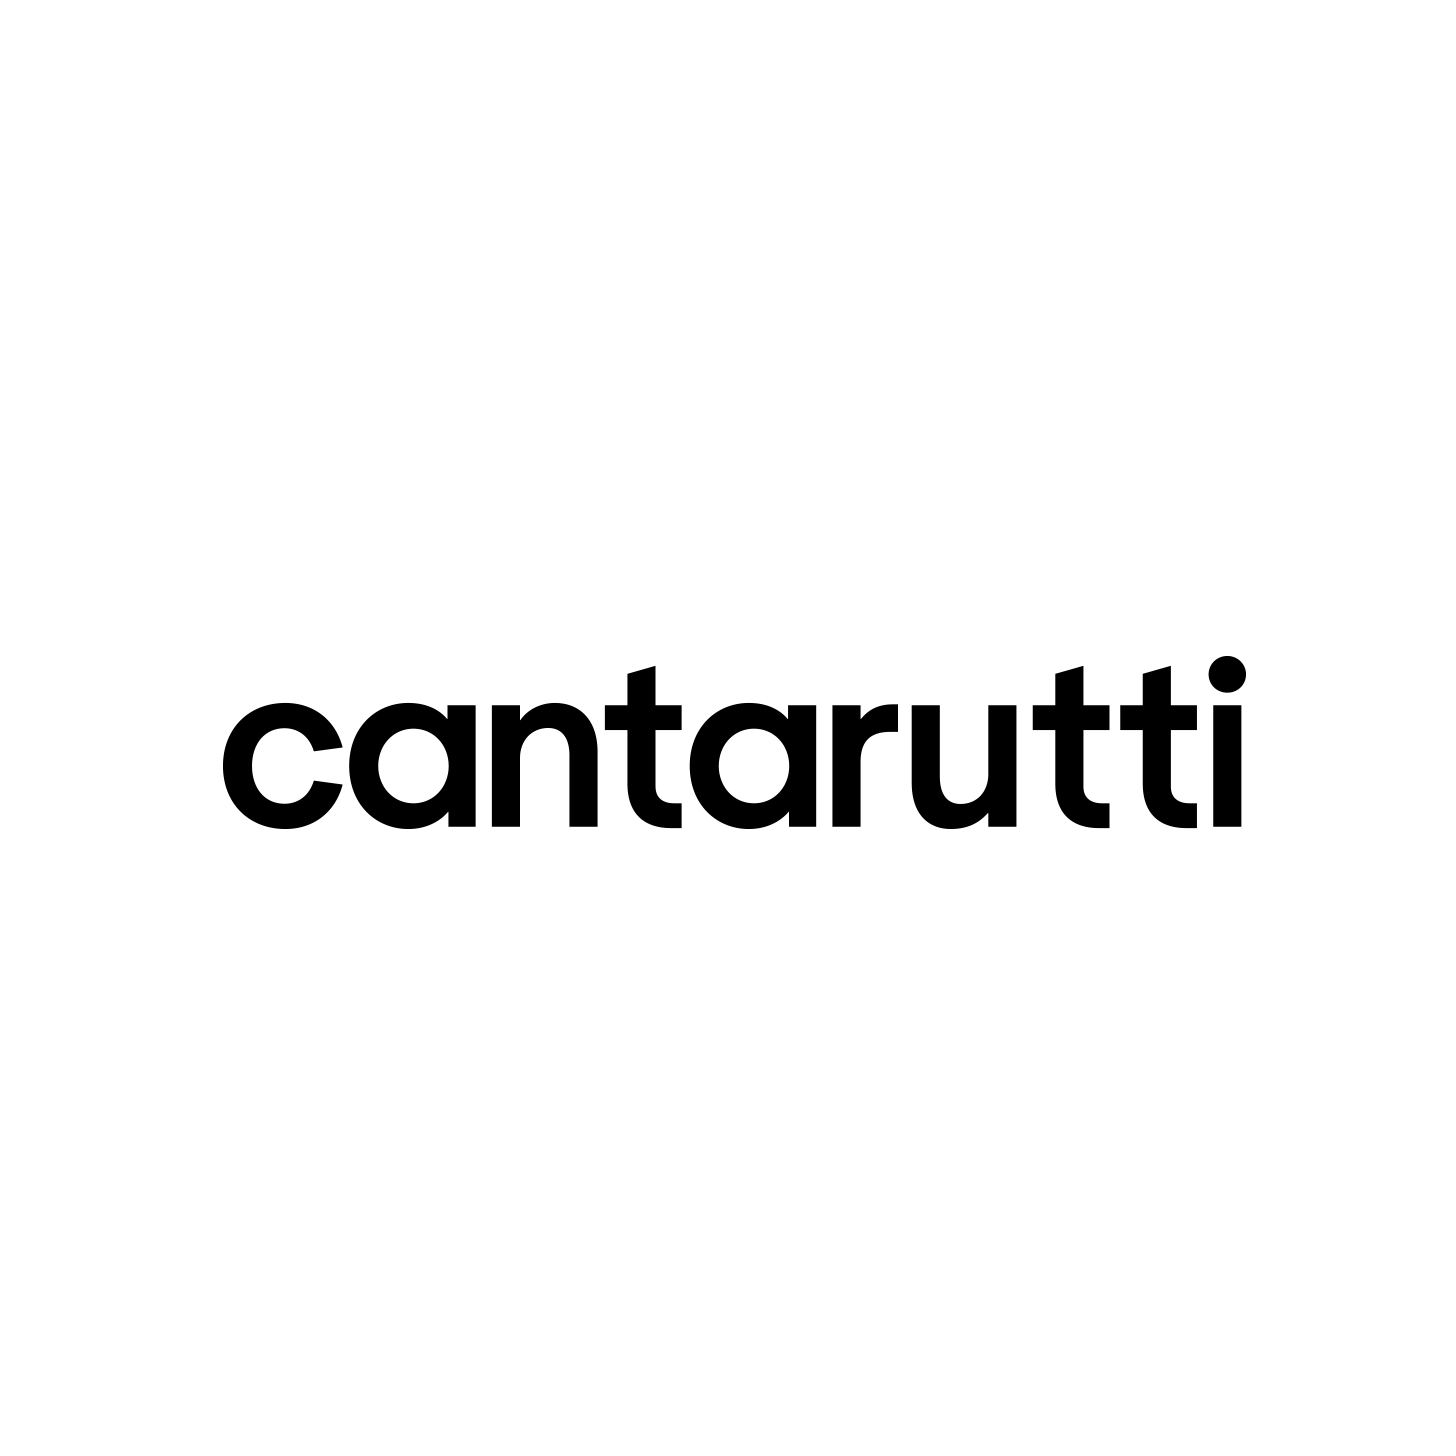 Cantarutti